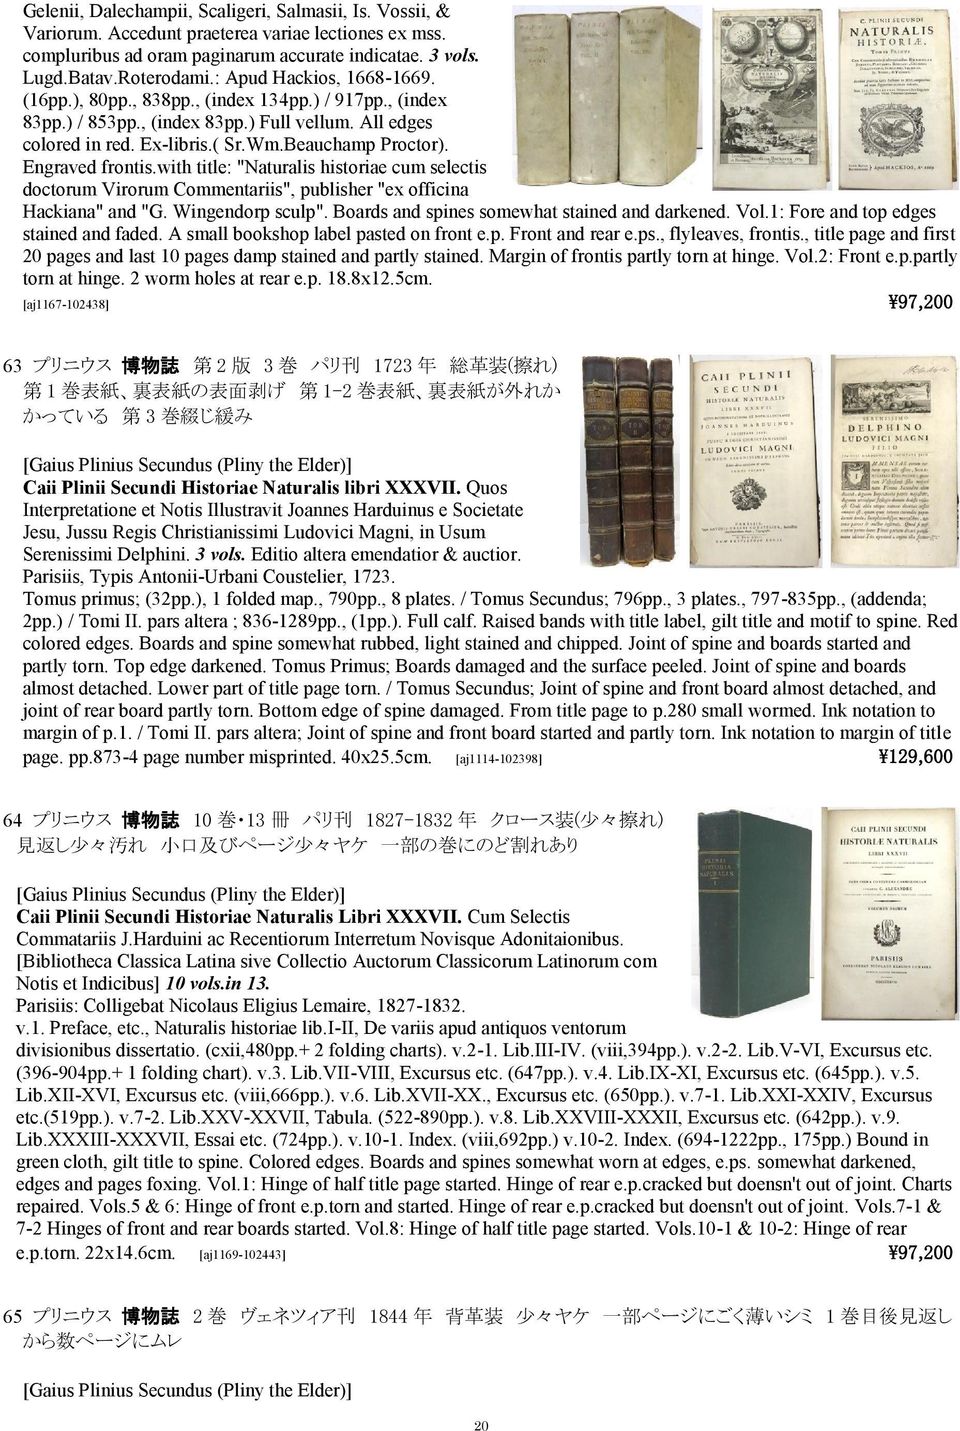 Engraved frontis.with title: "Naturalis historiae cum selectis doctorum Virorum Commentariis", publisher "ex officina Hackiana" and "G. Wingendorp sculp".